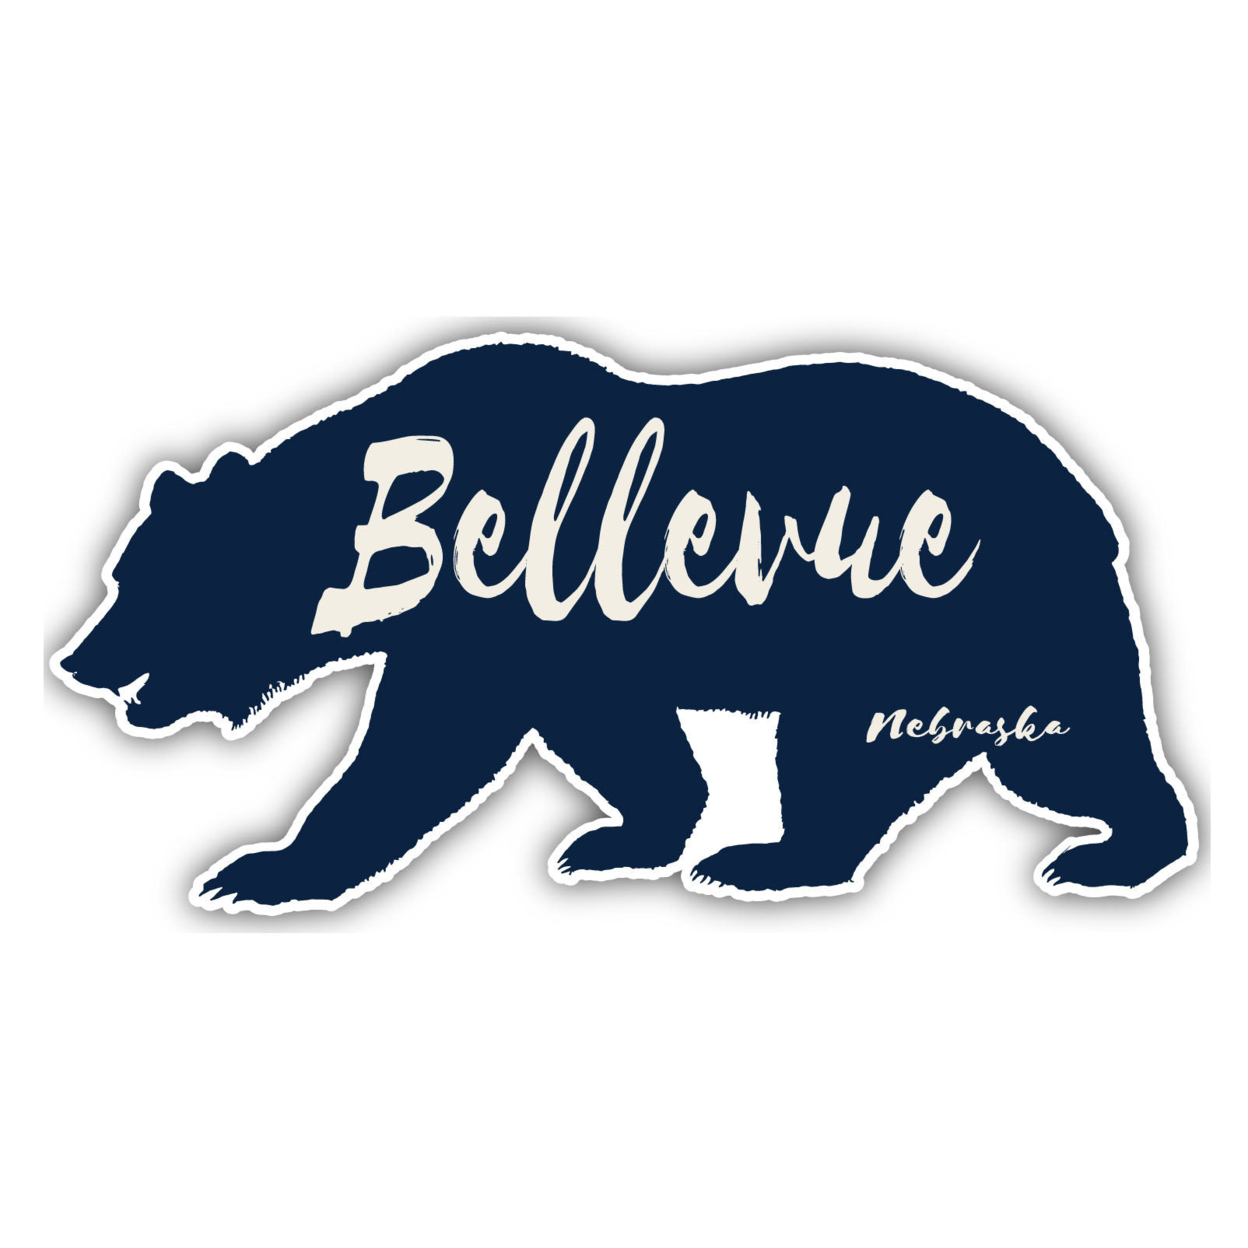 Bellevue Nebraska Souvenir Decorative Stickers (Choose Theme And Size) - Single Unit, 4-Inch, Great Outdoors